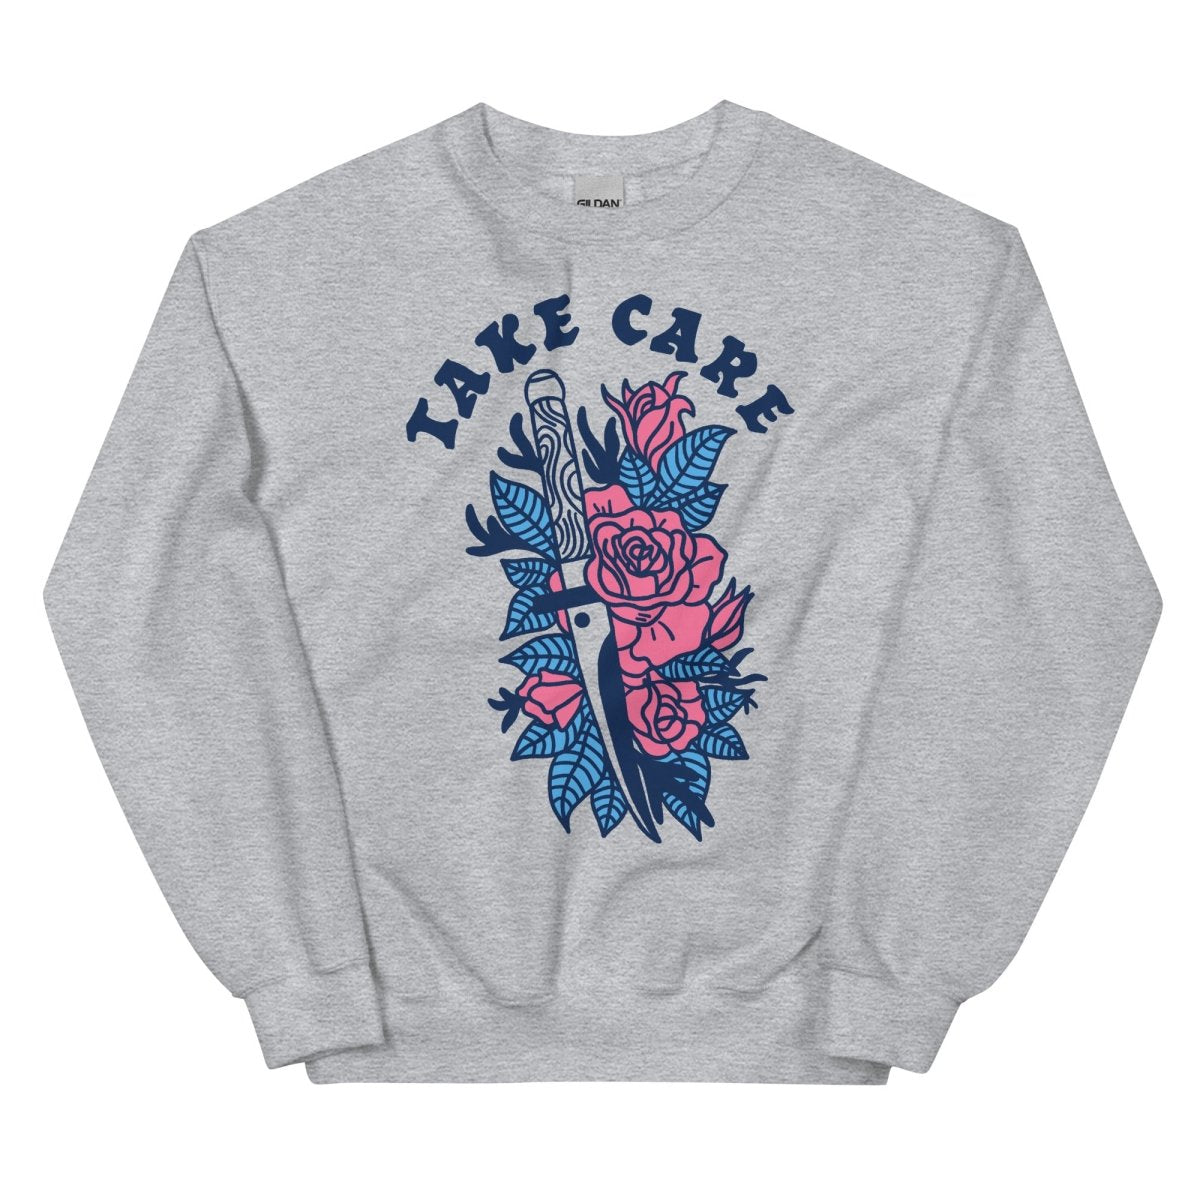 Take Care Sweatshirt (new version) - Pretty Bad Co.